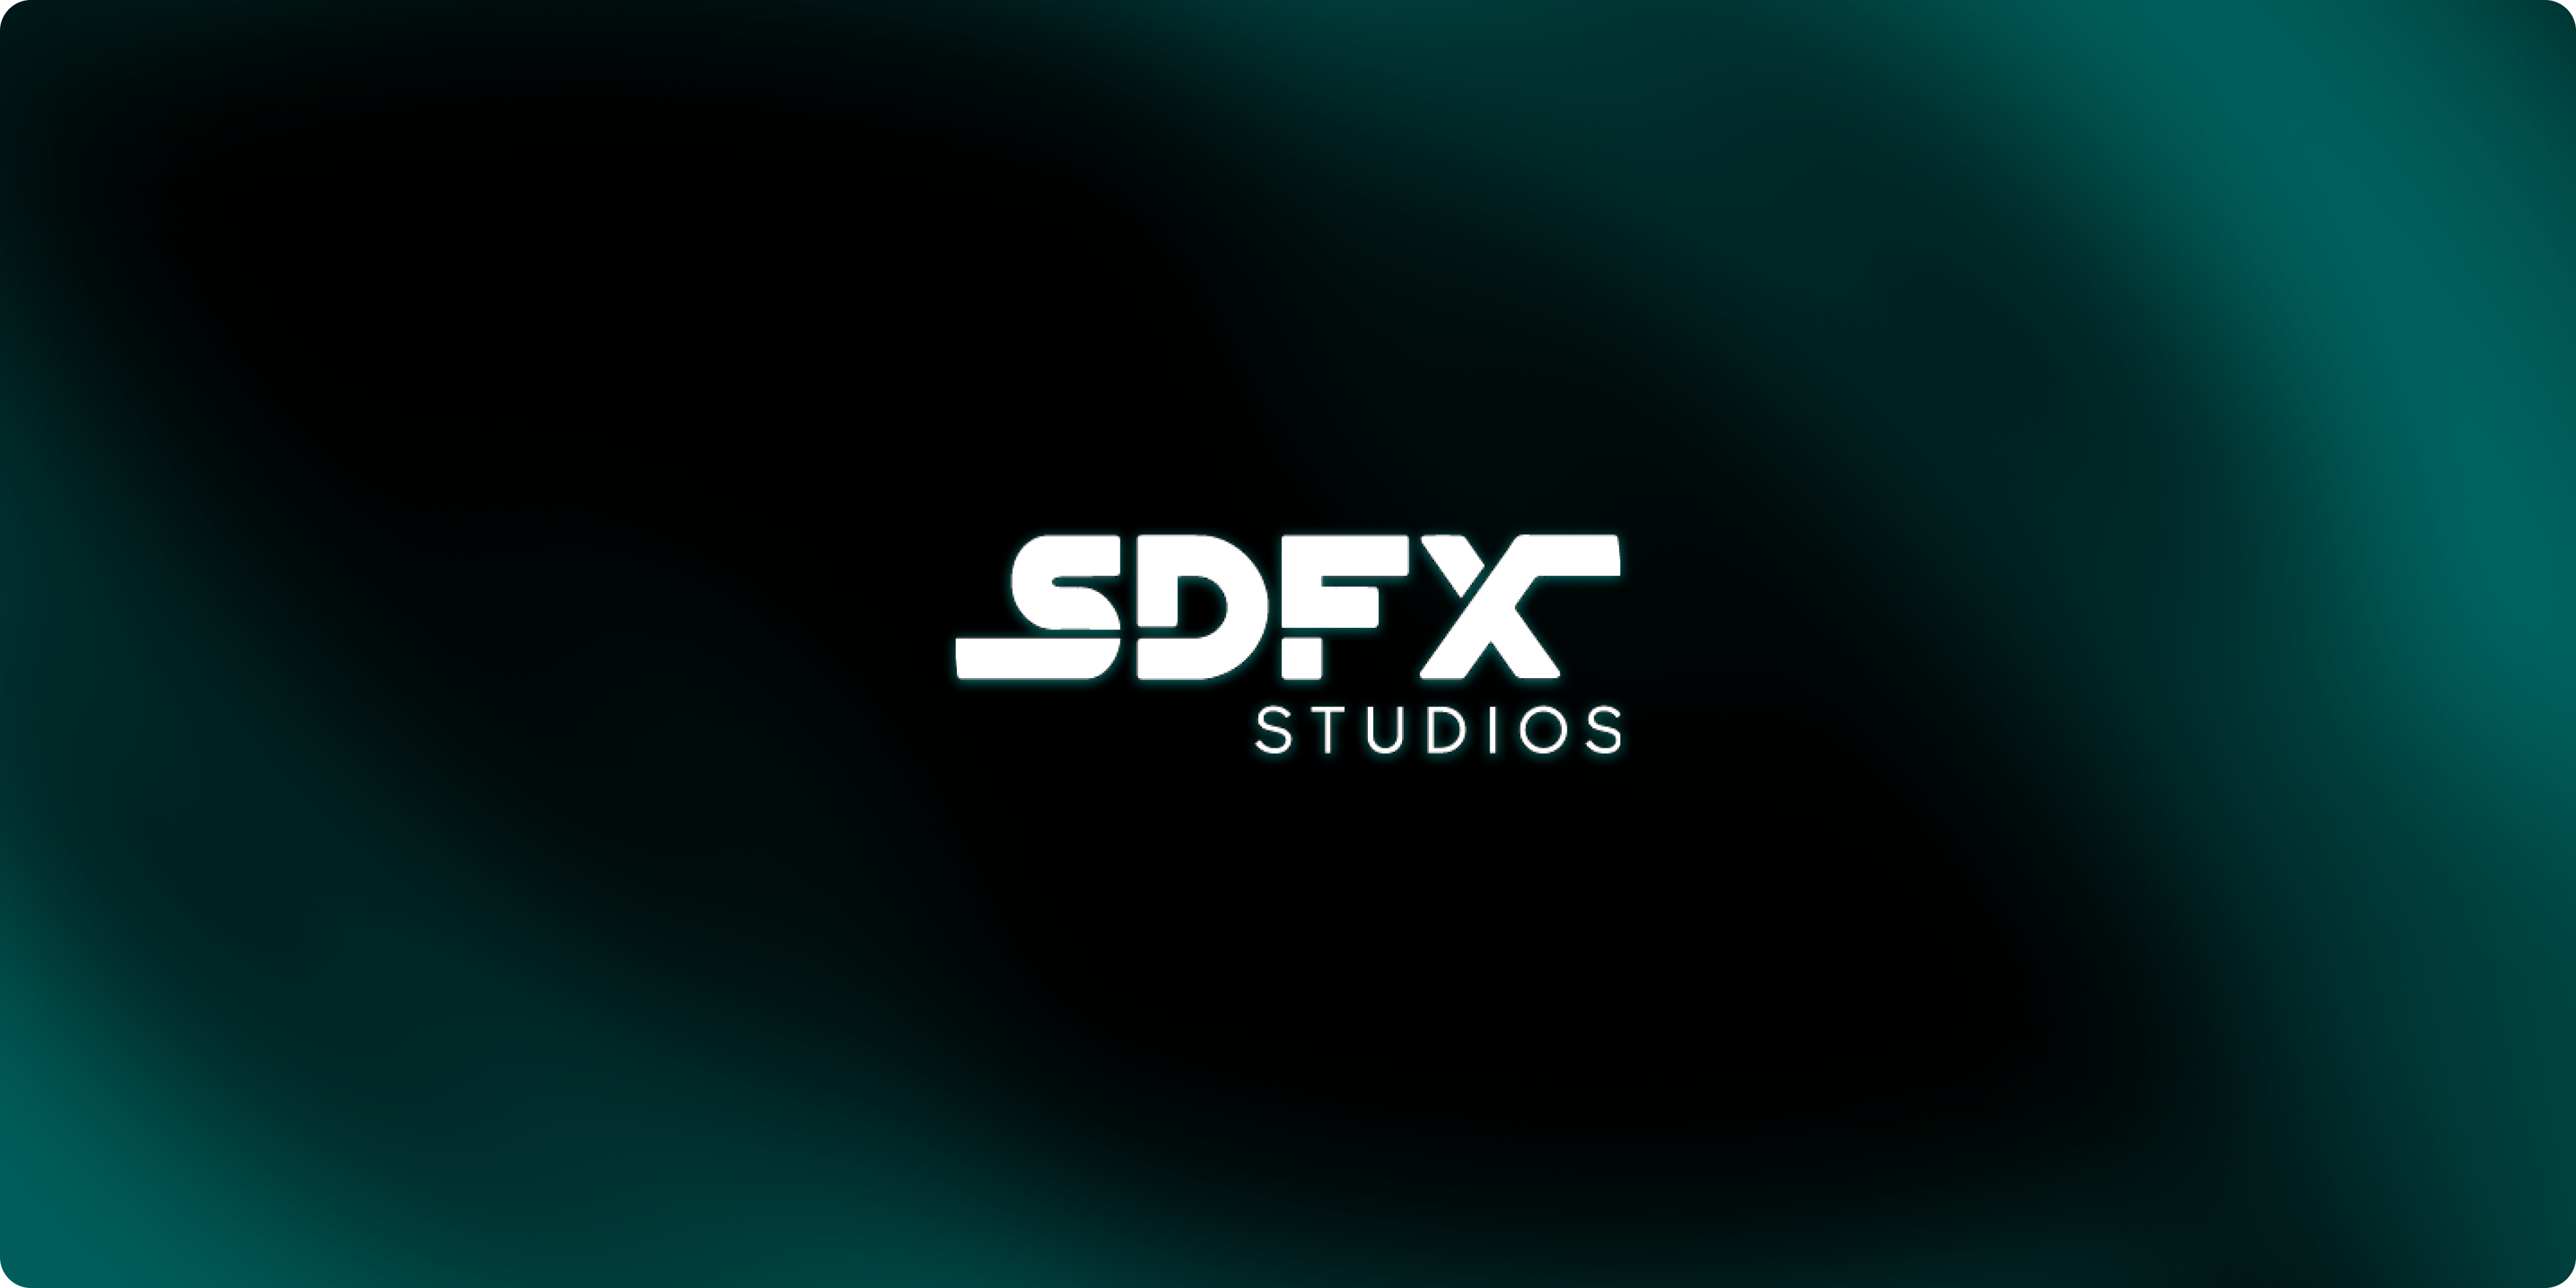 Avant-Garde Website - SDFX Studios by Brand Vision Marketing